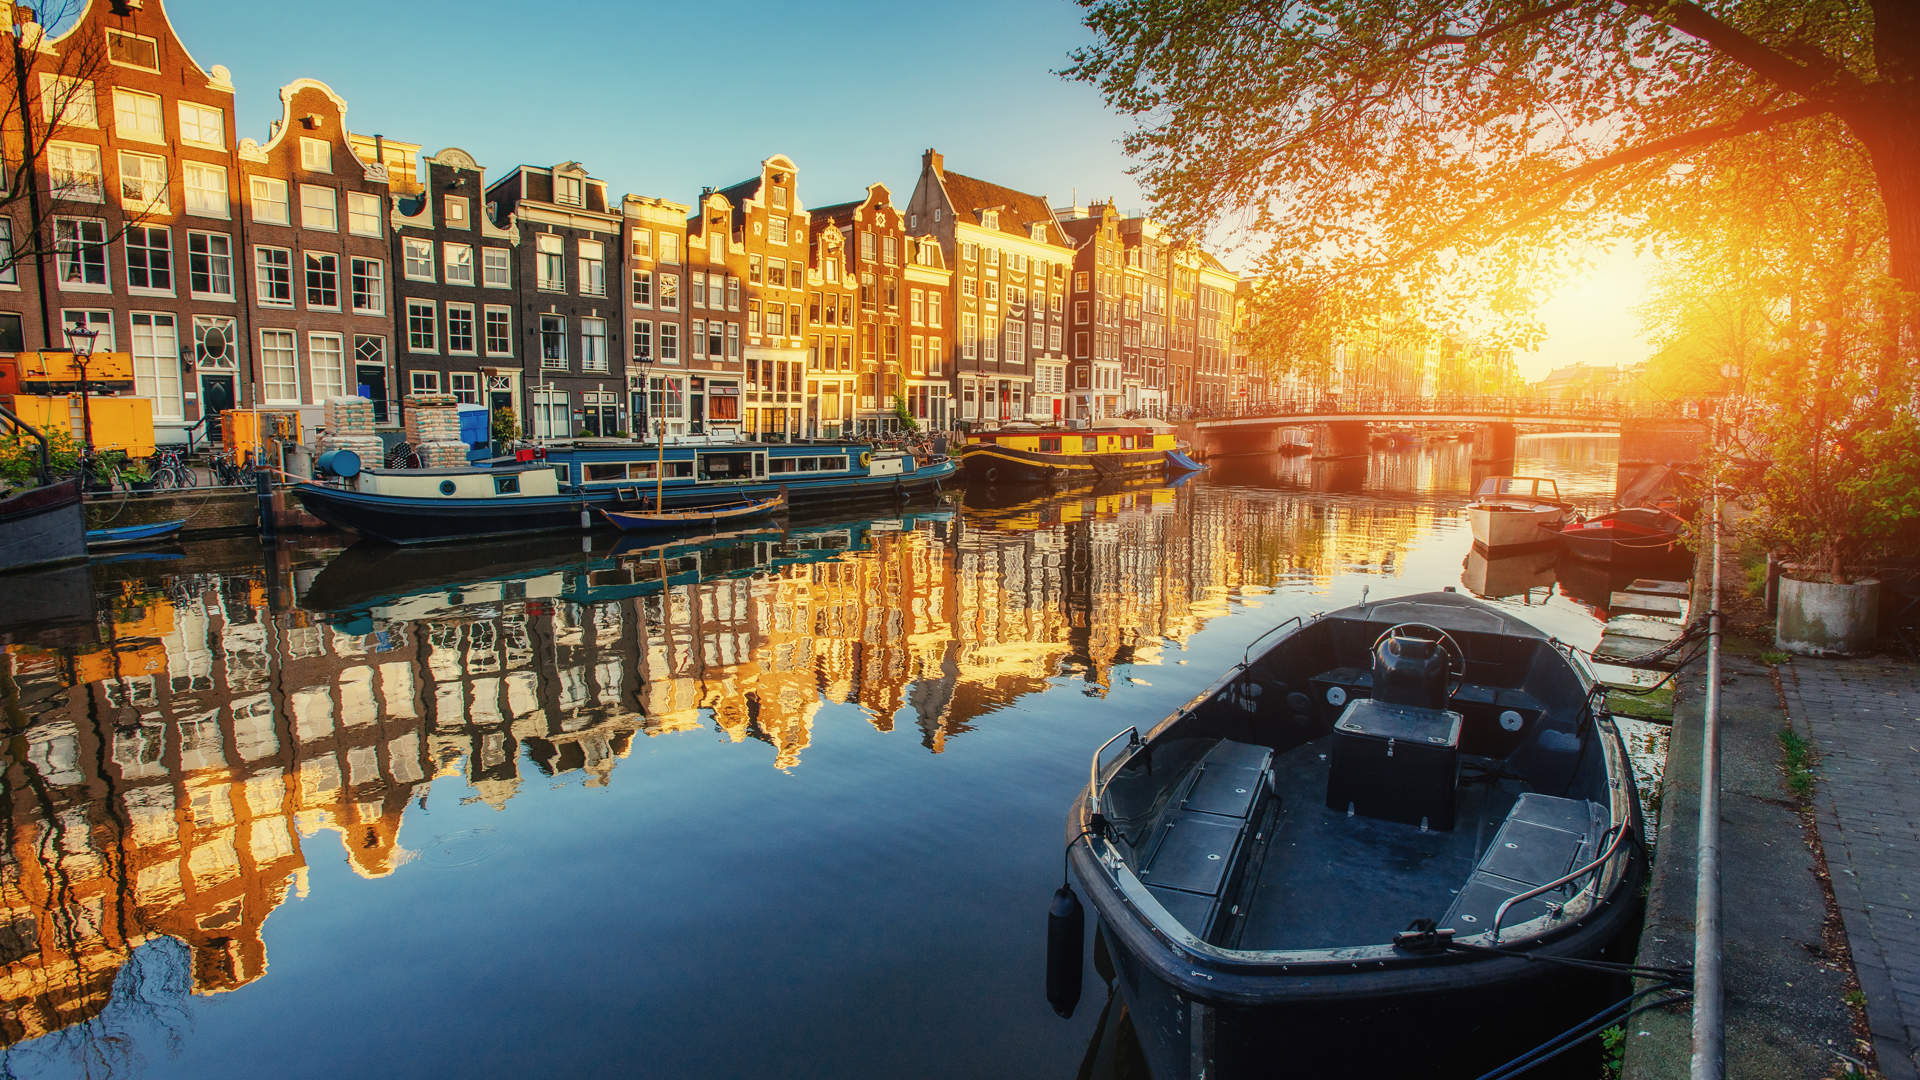 Amsterdam Canal Netherlands